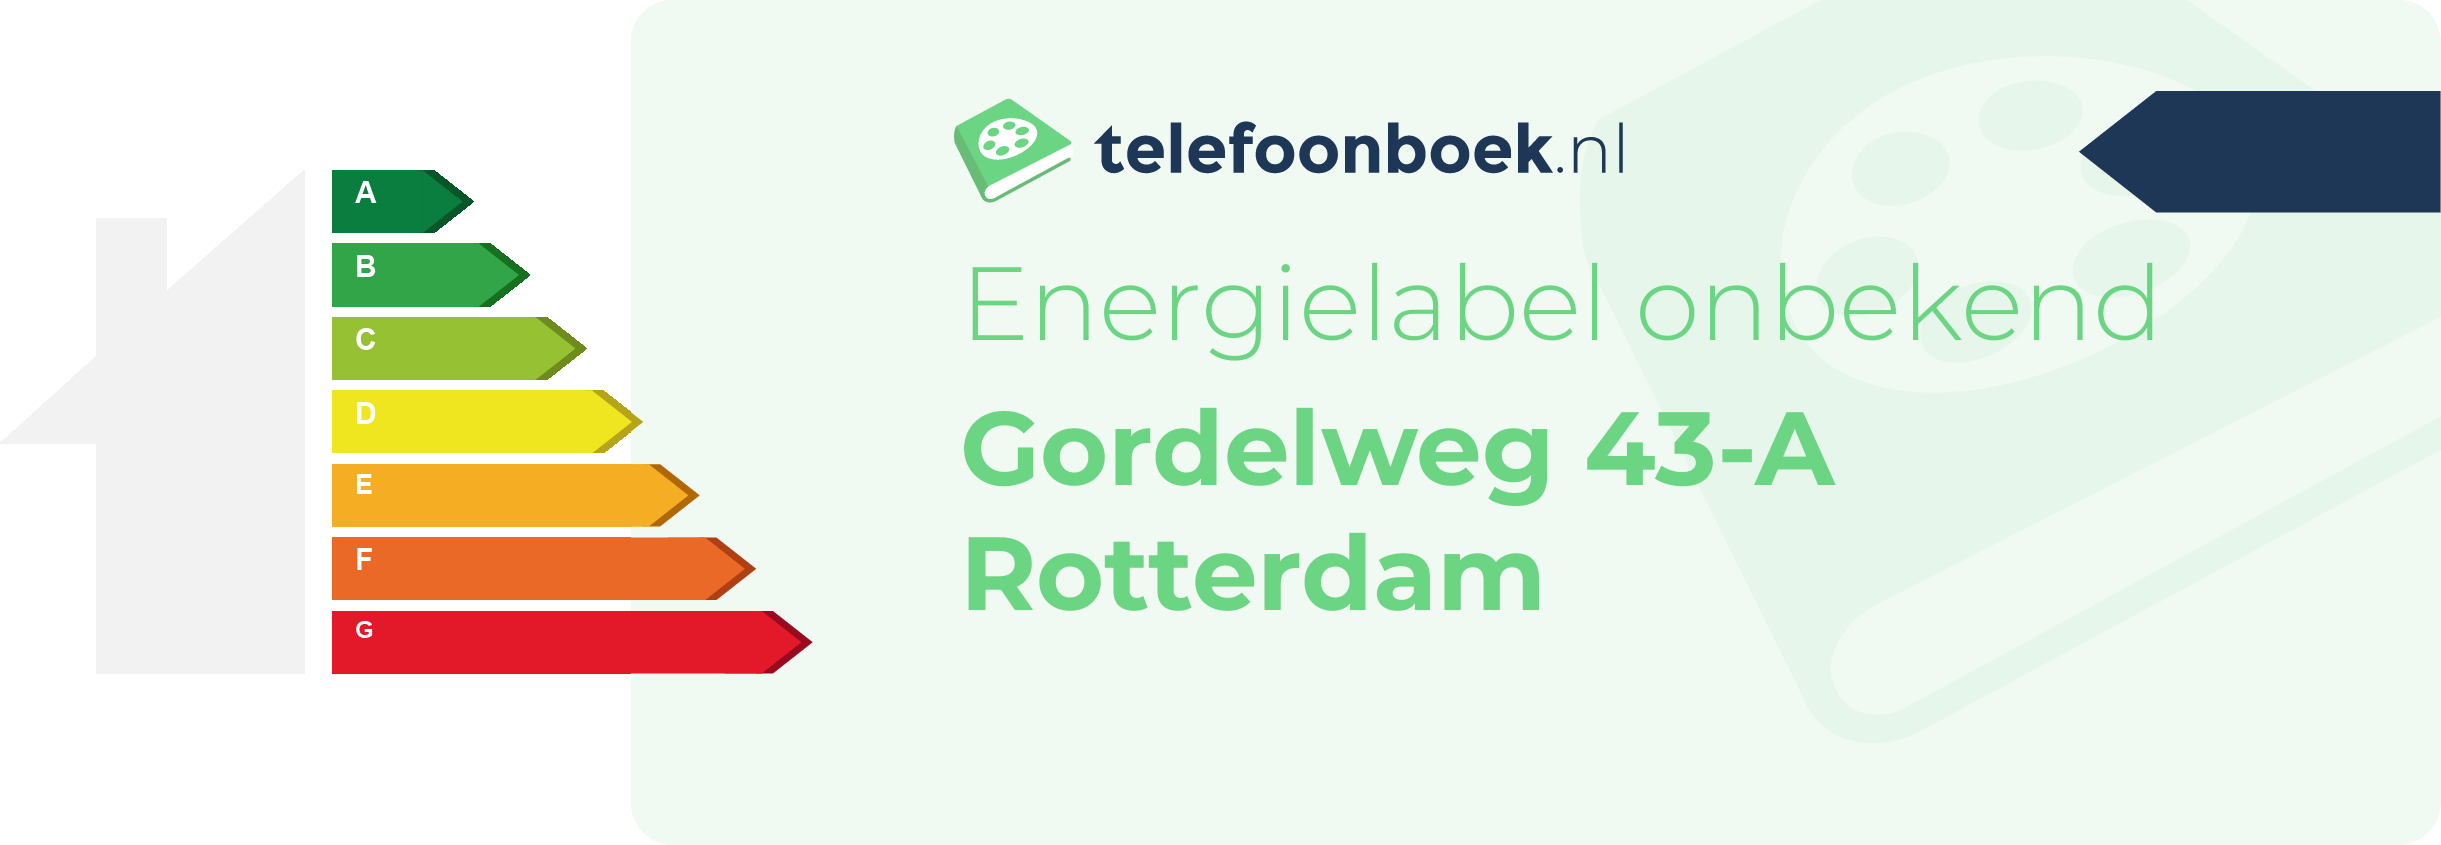 Energielabel Gordelweg 43-A Rotterdam